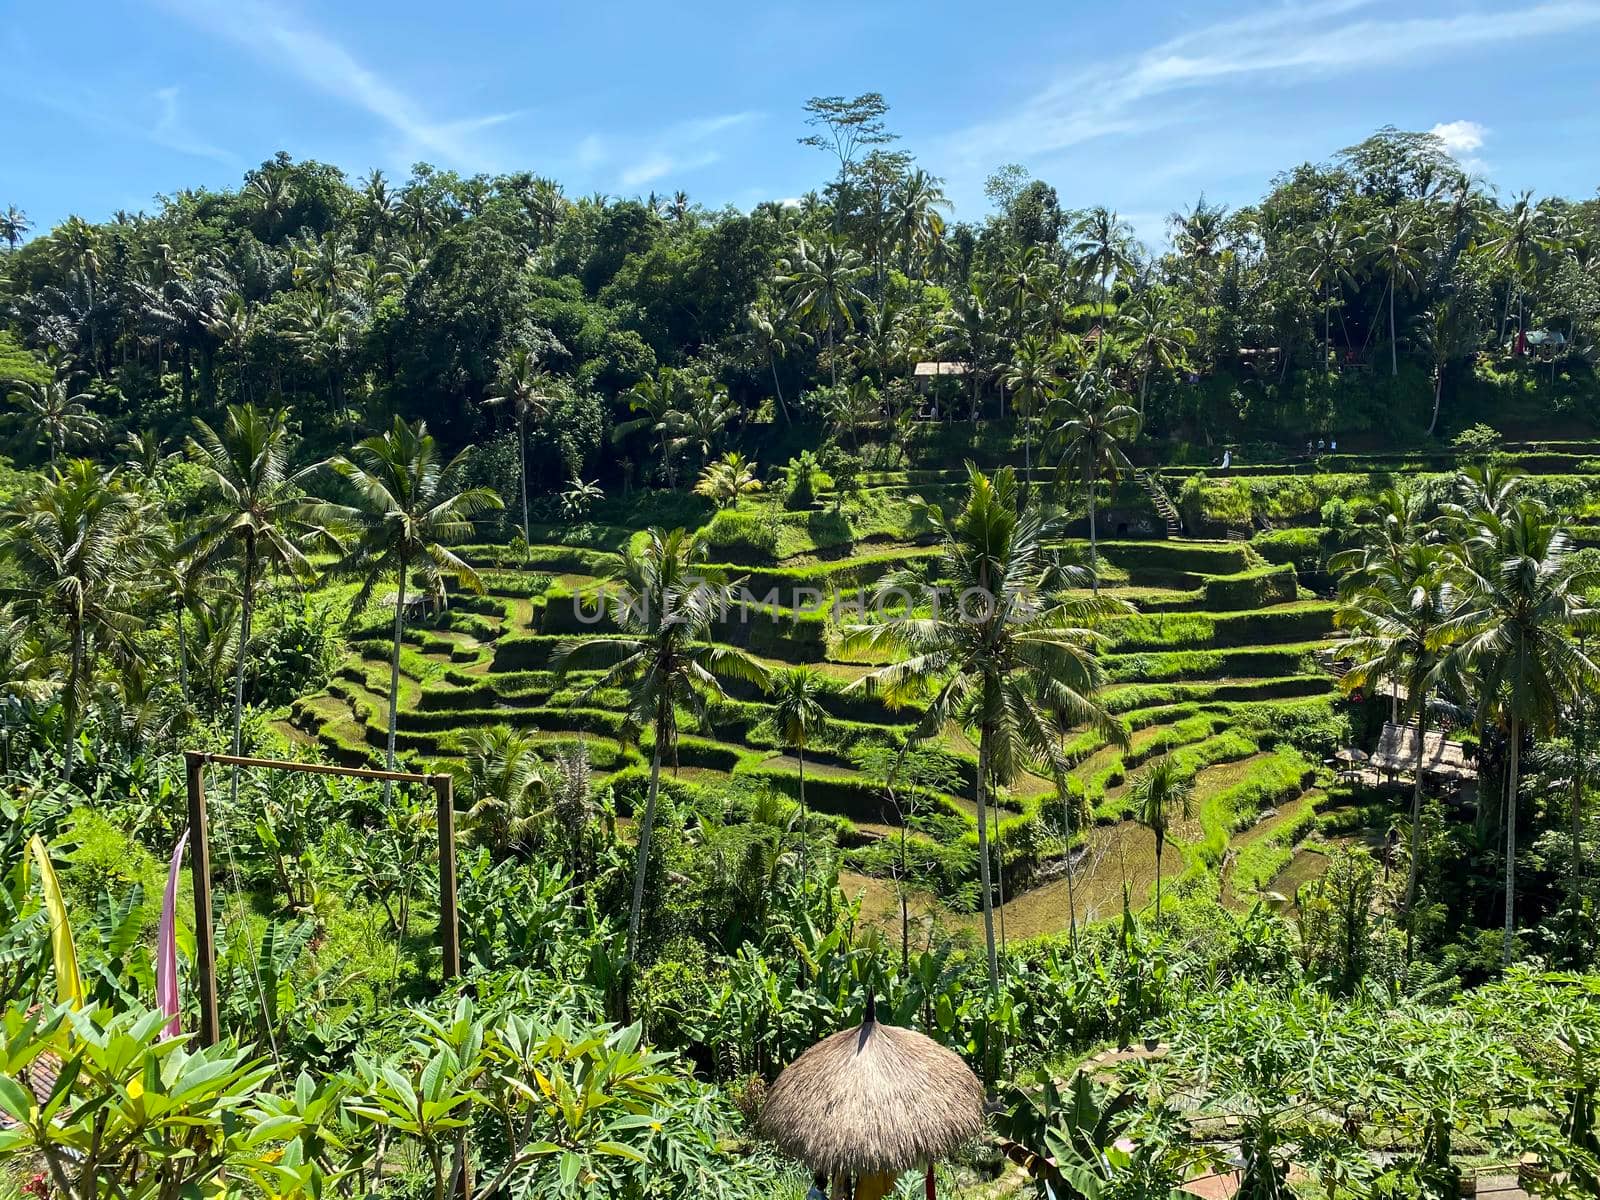 Tegallalang Rice Terraces, Bali, Indonesia - stock photo by kaliaevaen